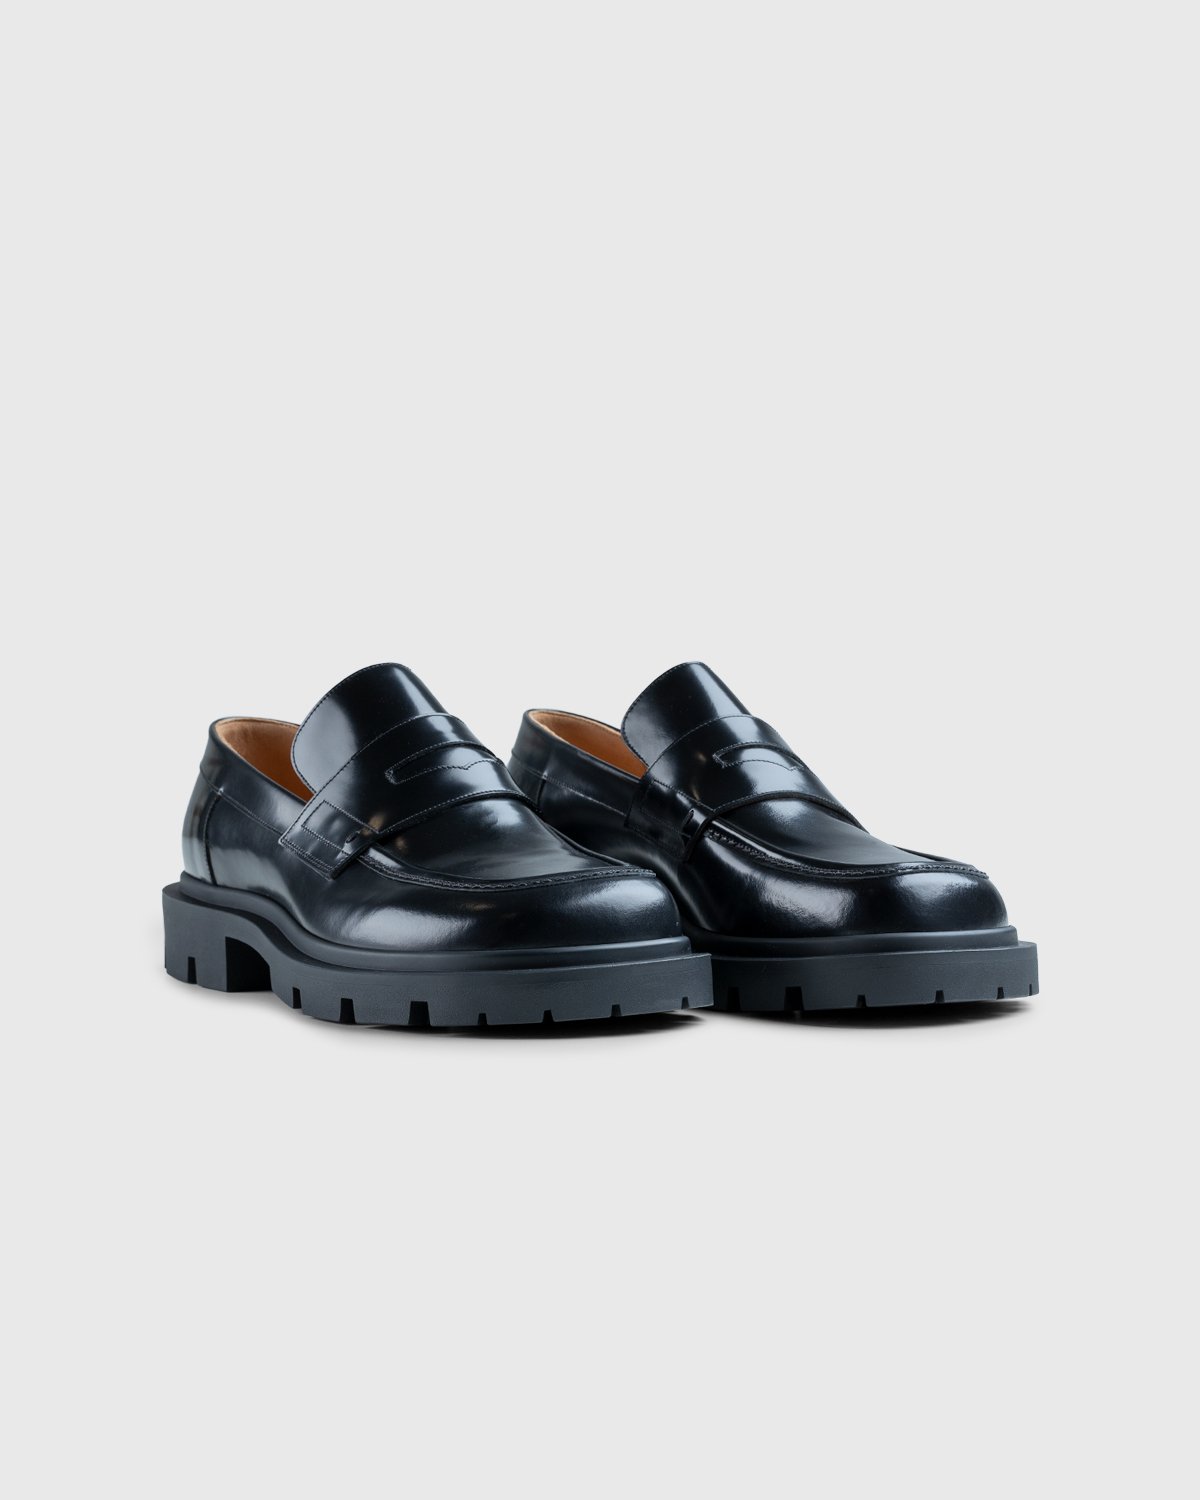 Maison Margiela - Leather Loafers Black - Footwear - Black - Image 2